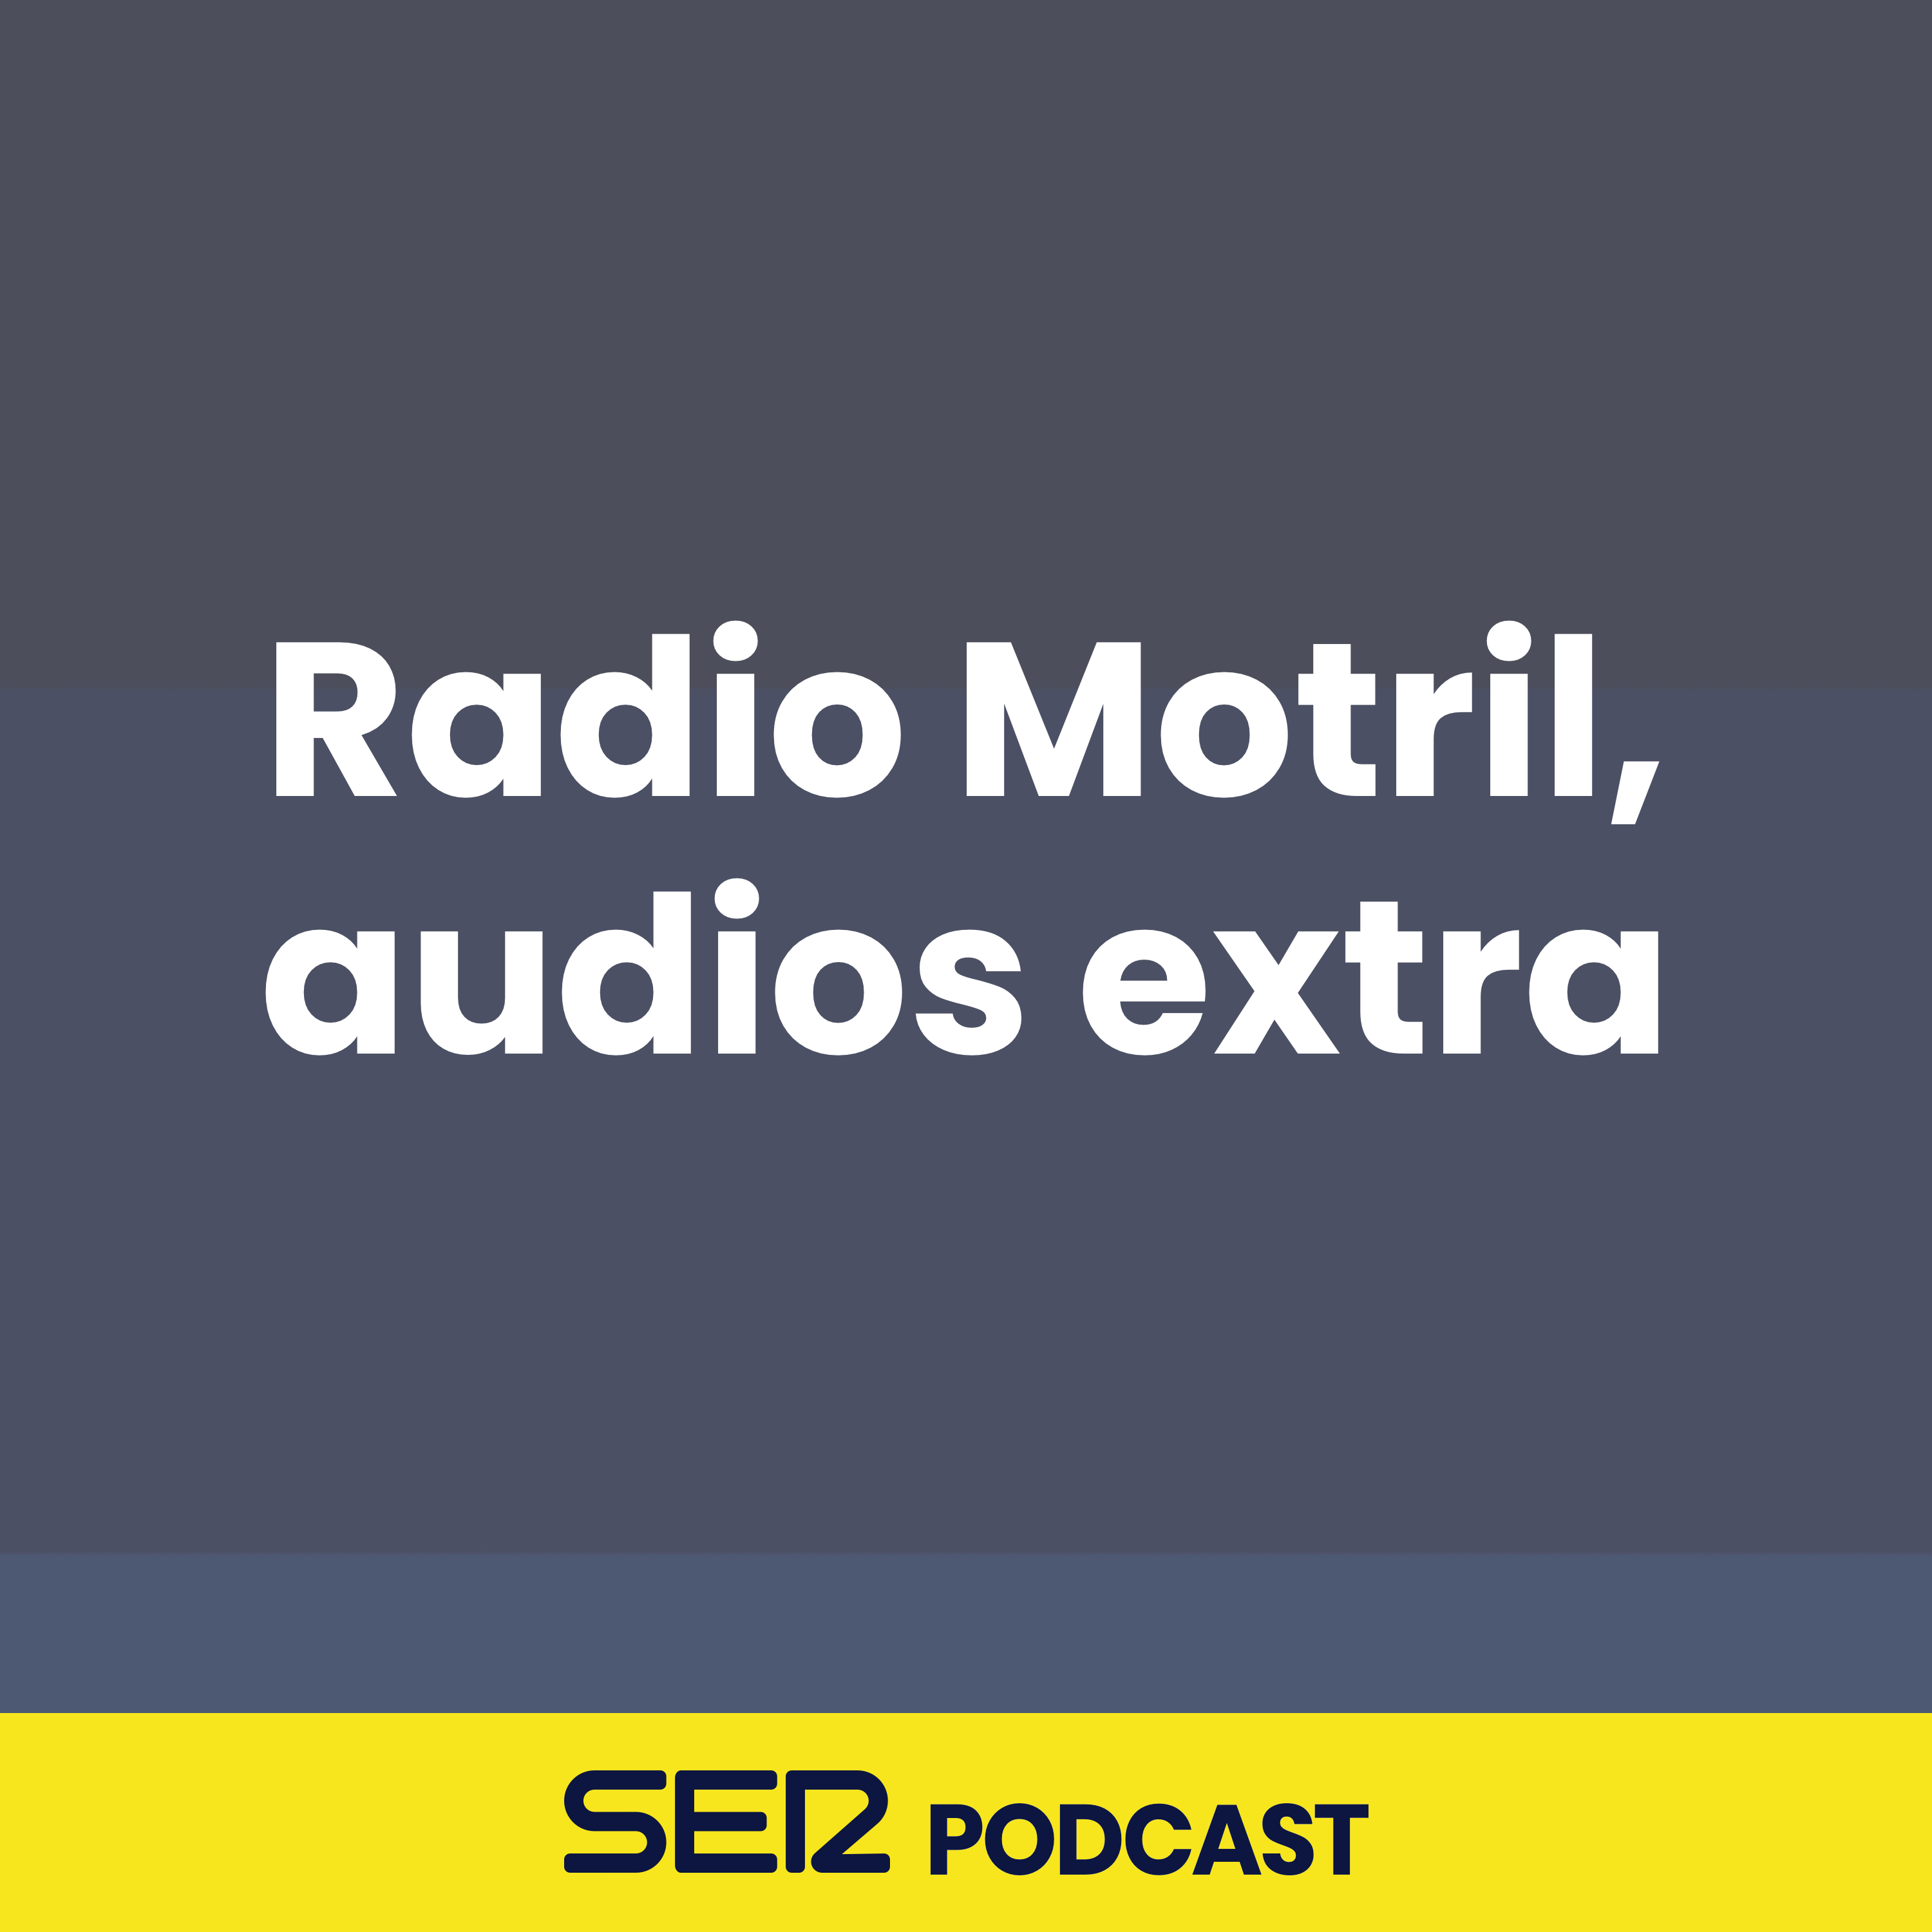 Radio Motril, audios extra